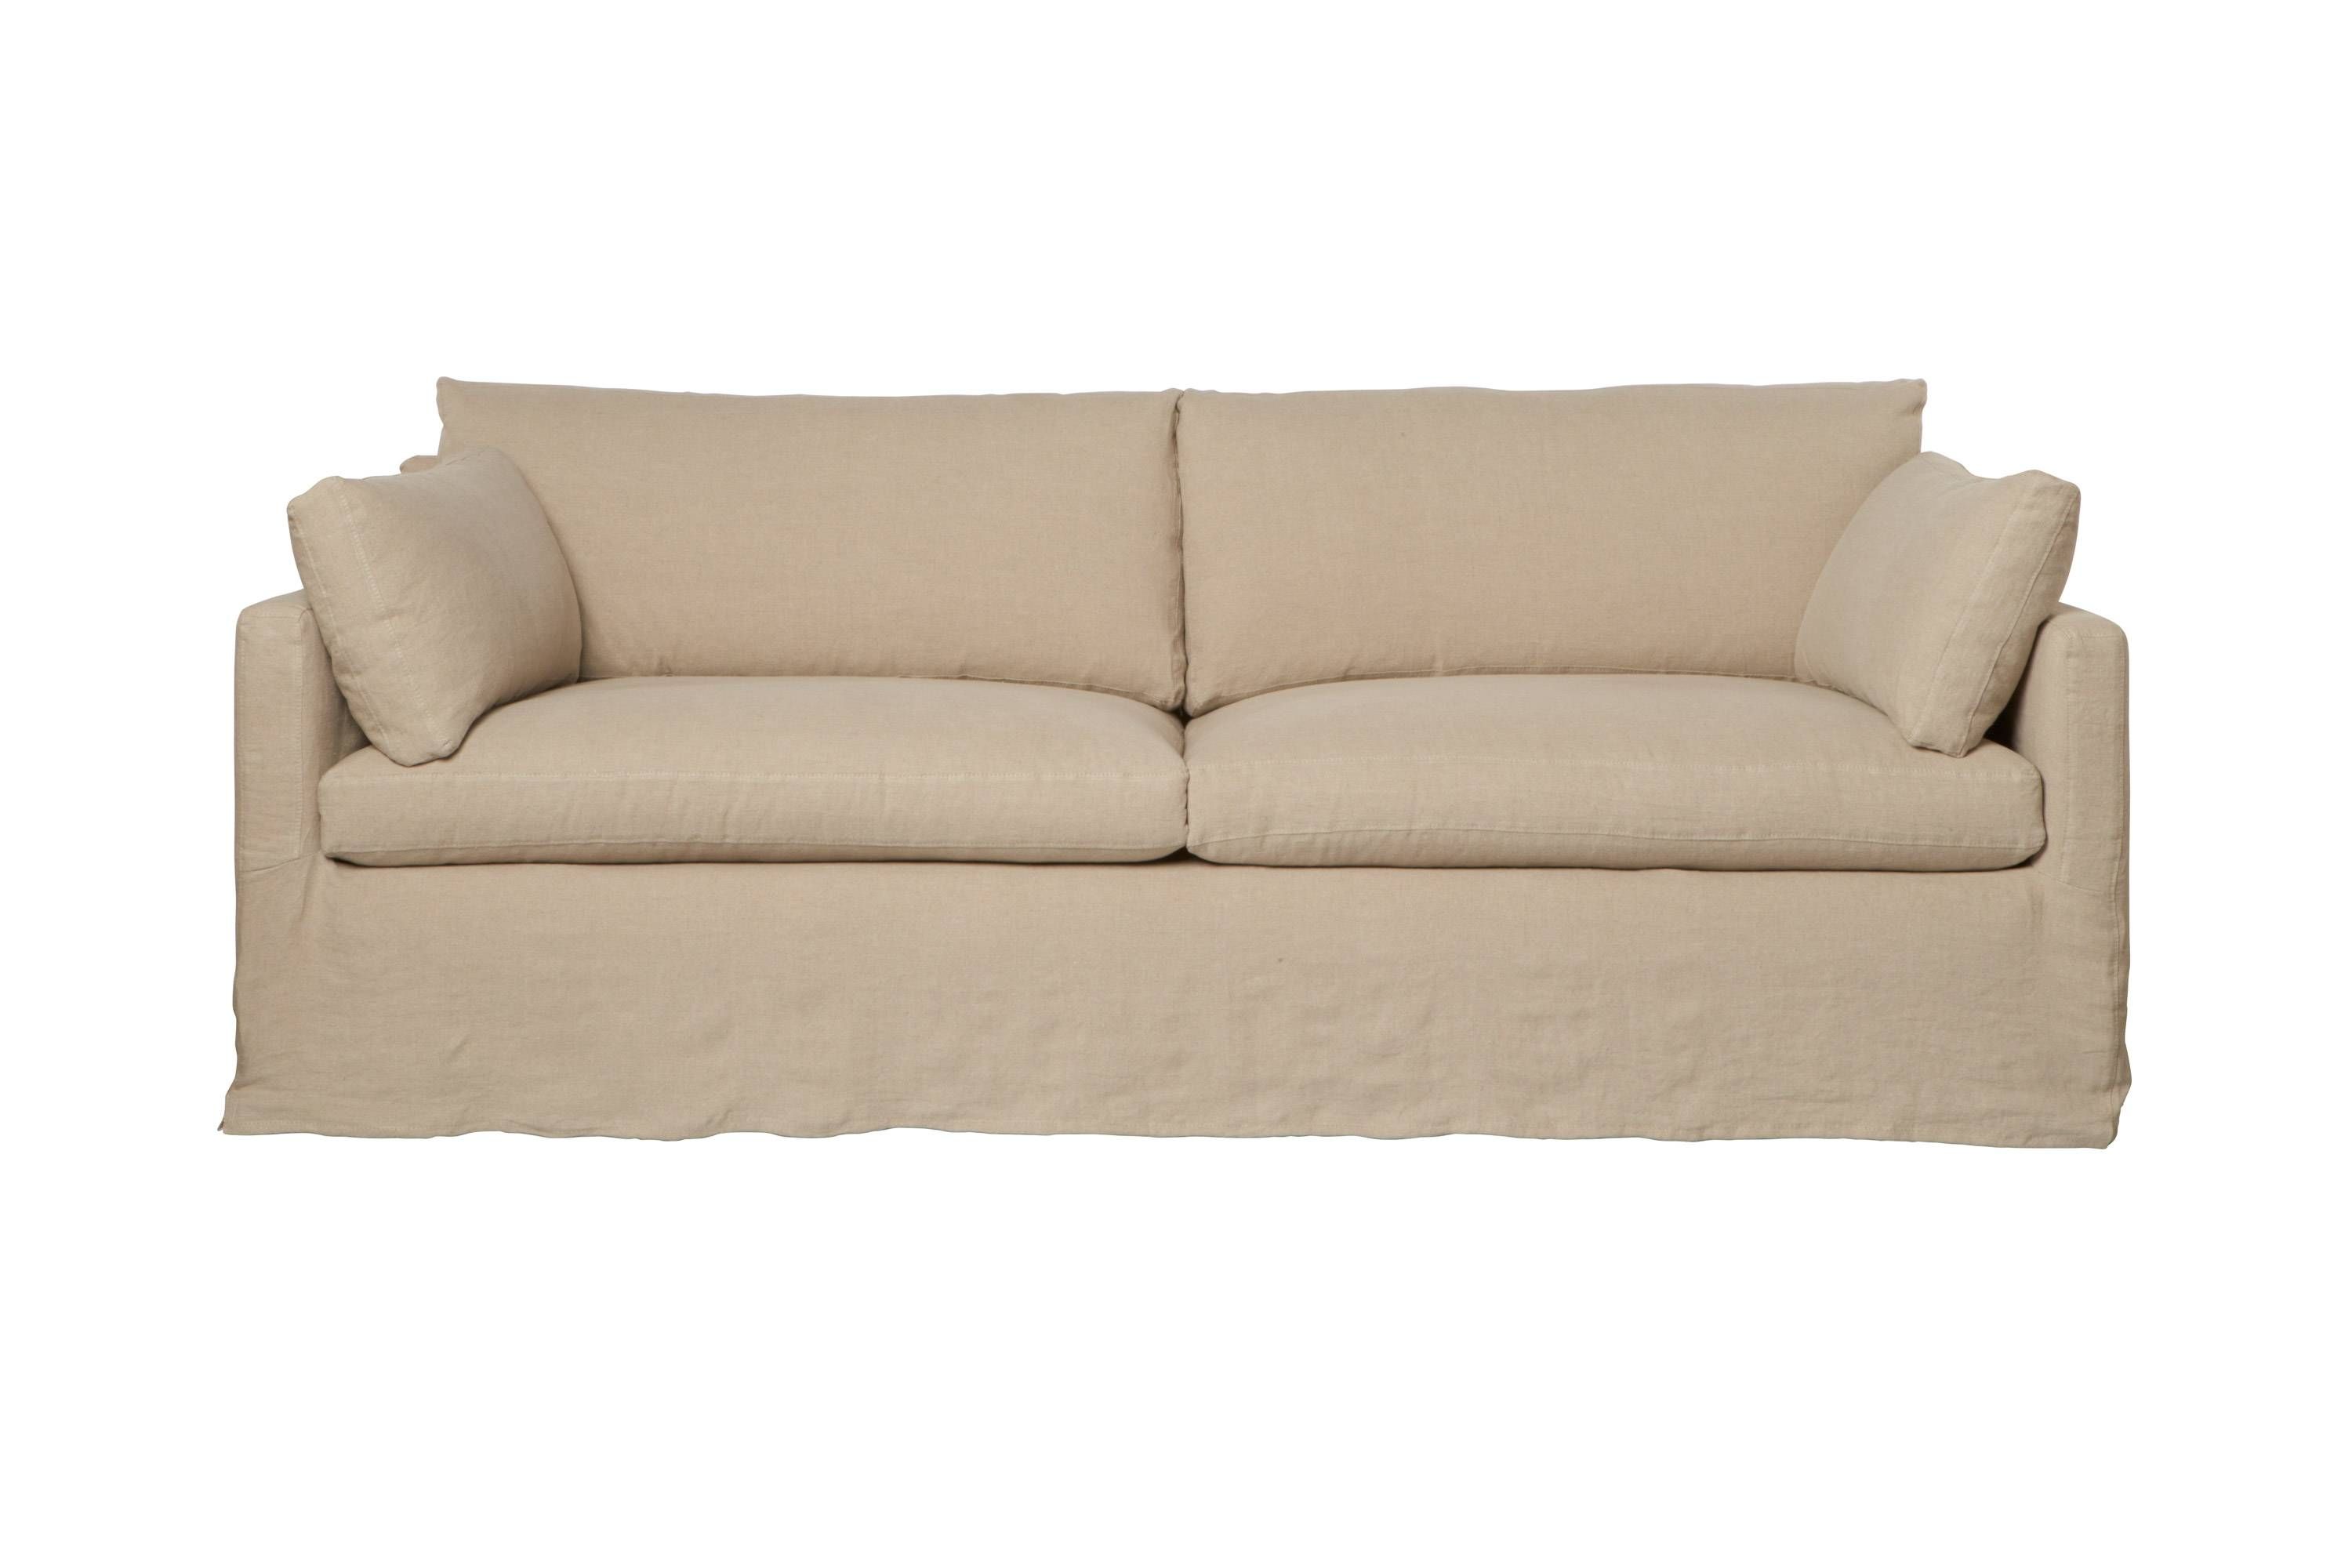 Armless Sofa Slipcover With Design Photo 15737 | Kengire Regarding Large Sofa Slipcovers (View 26 of 30)